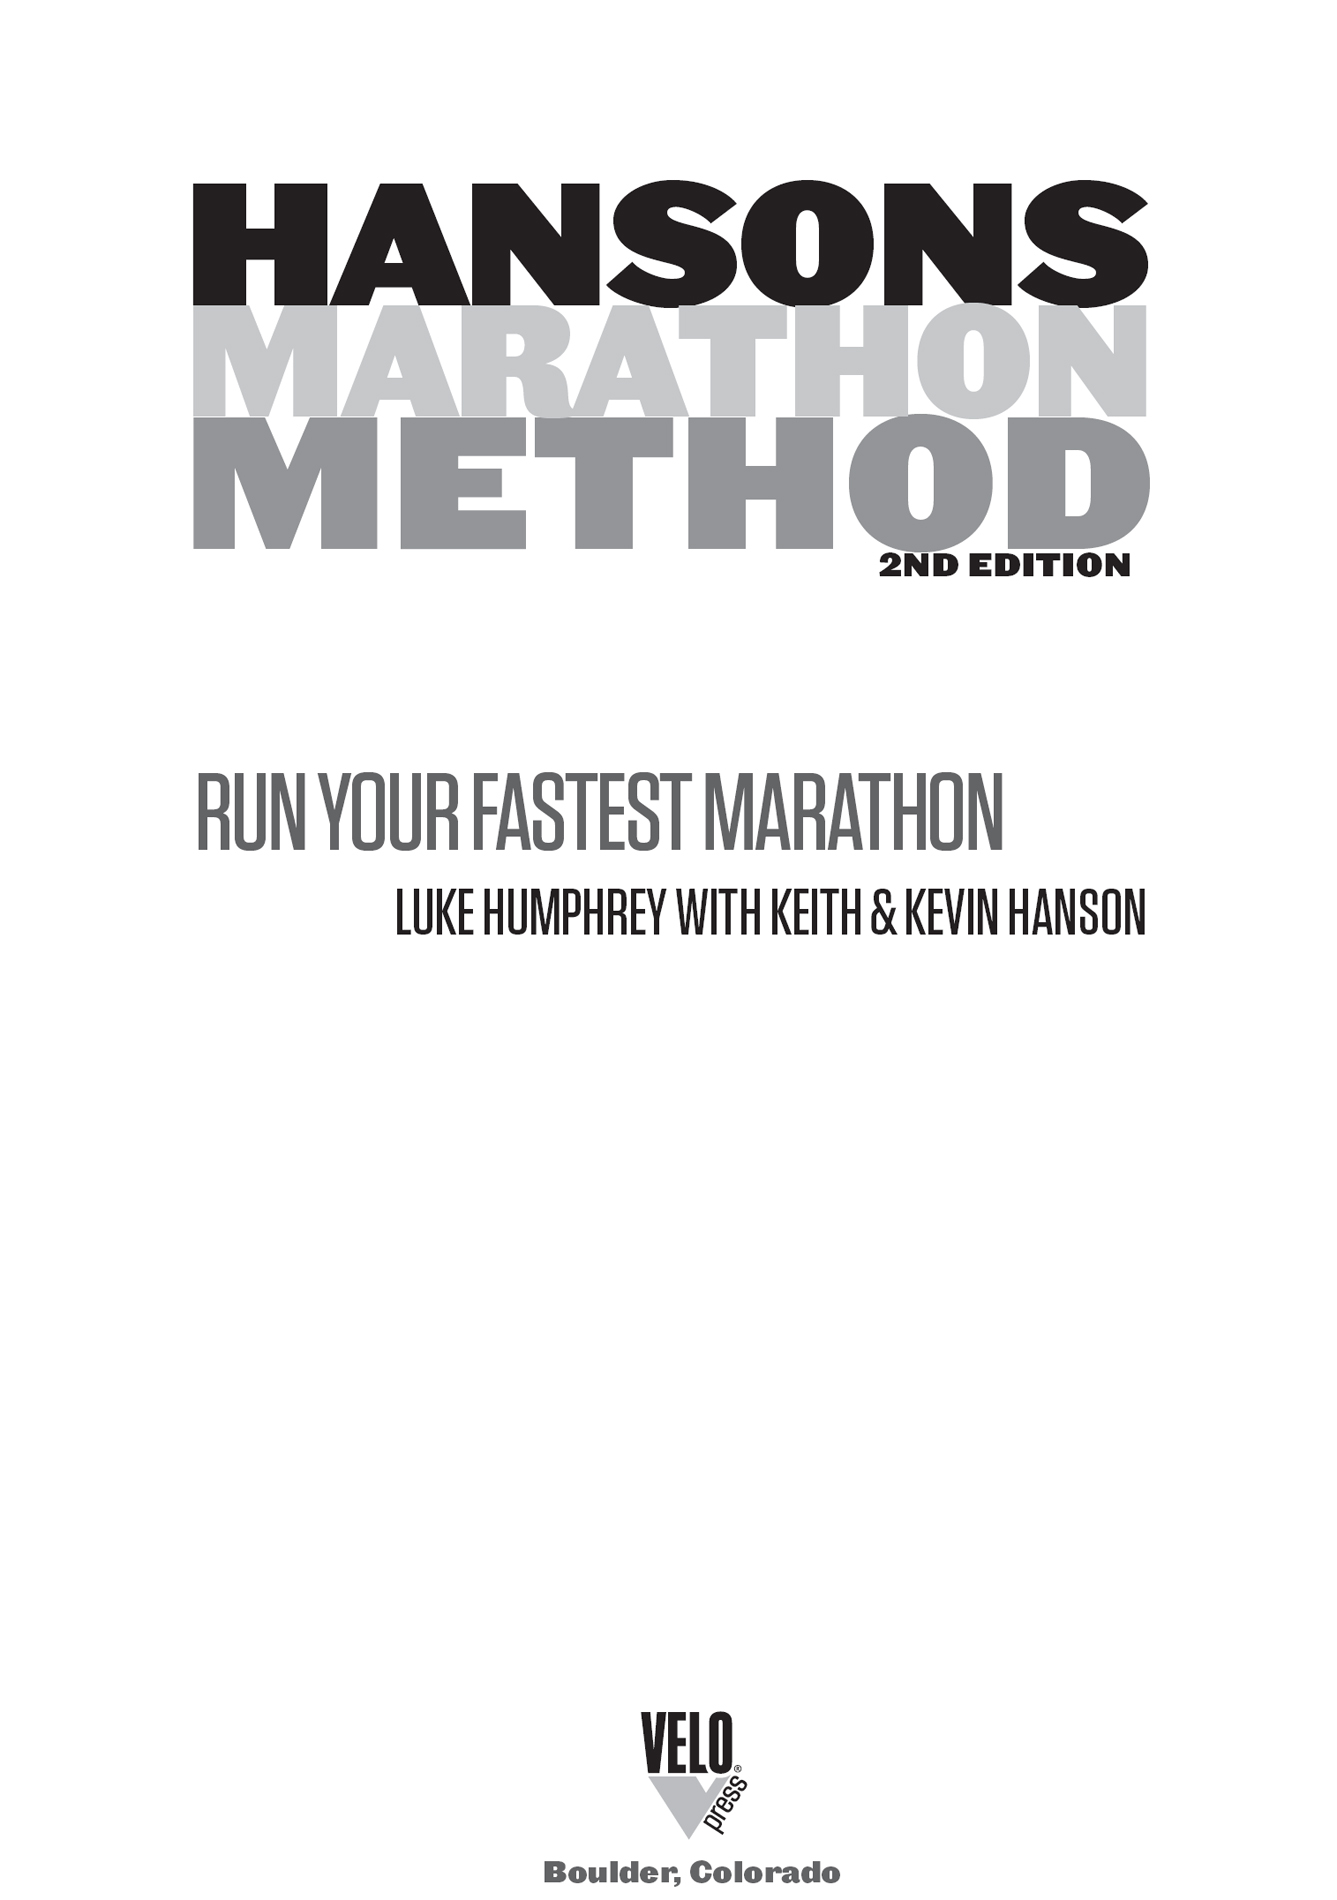 Hansons Marathon Method Run Your Fastest Marathon the Hansons Way - image 2